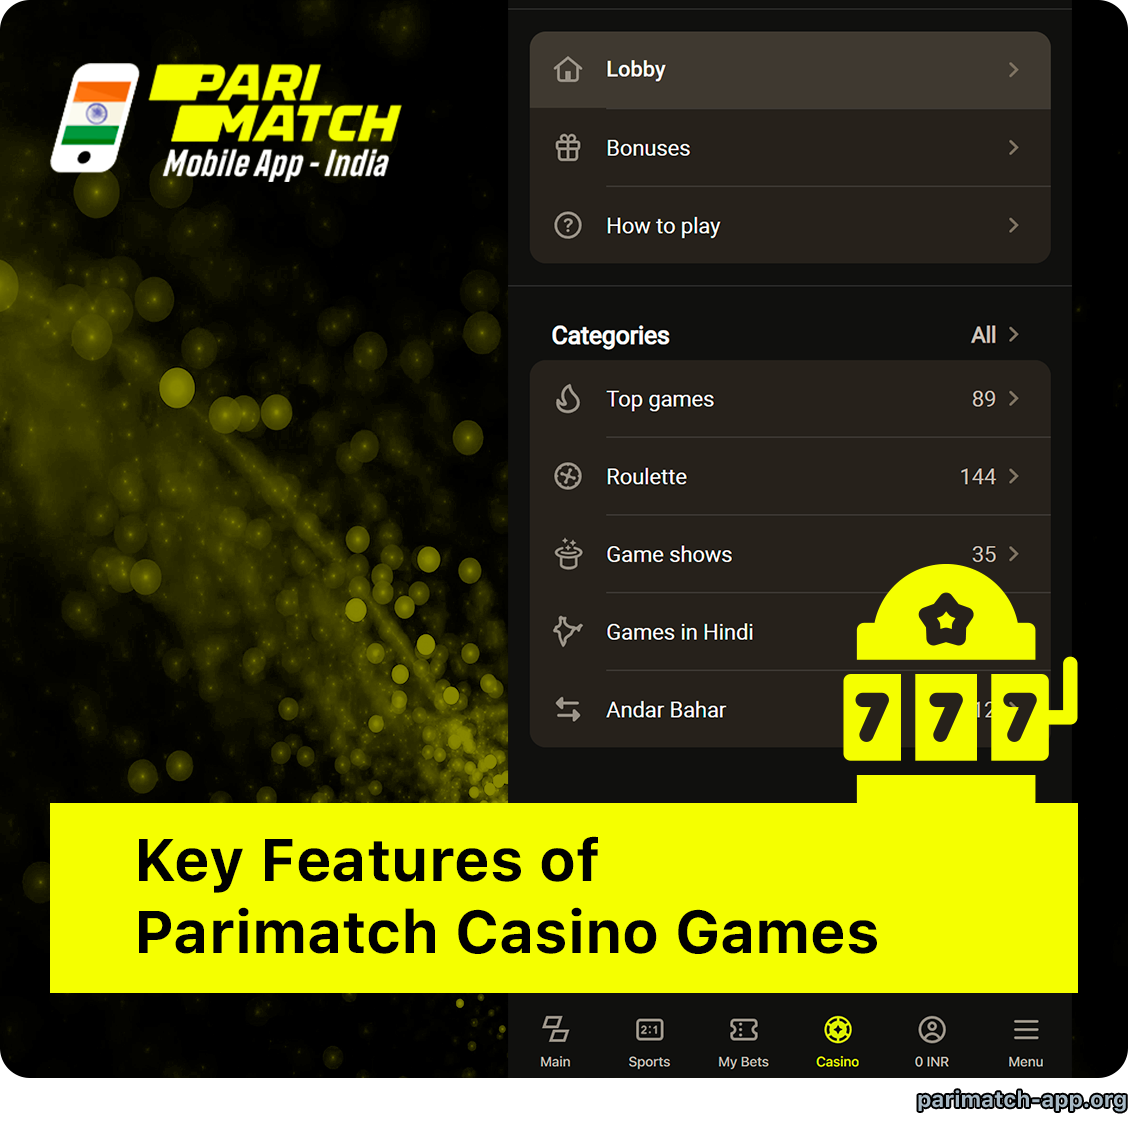 Key Features of Parimatch App Casino - Categories